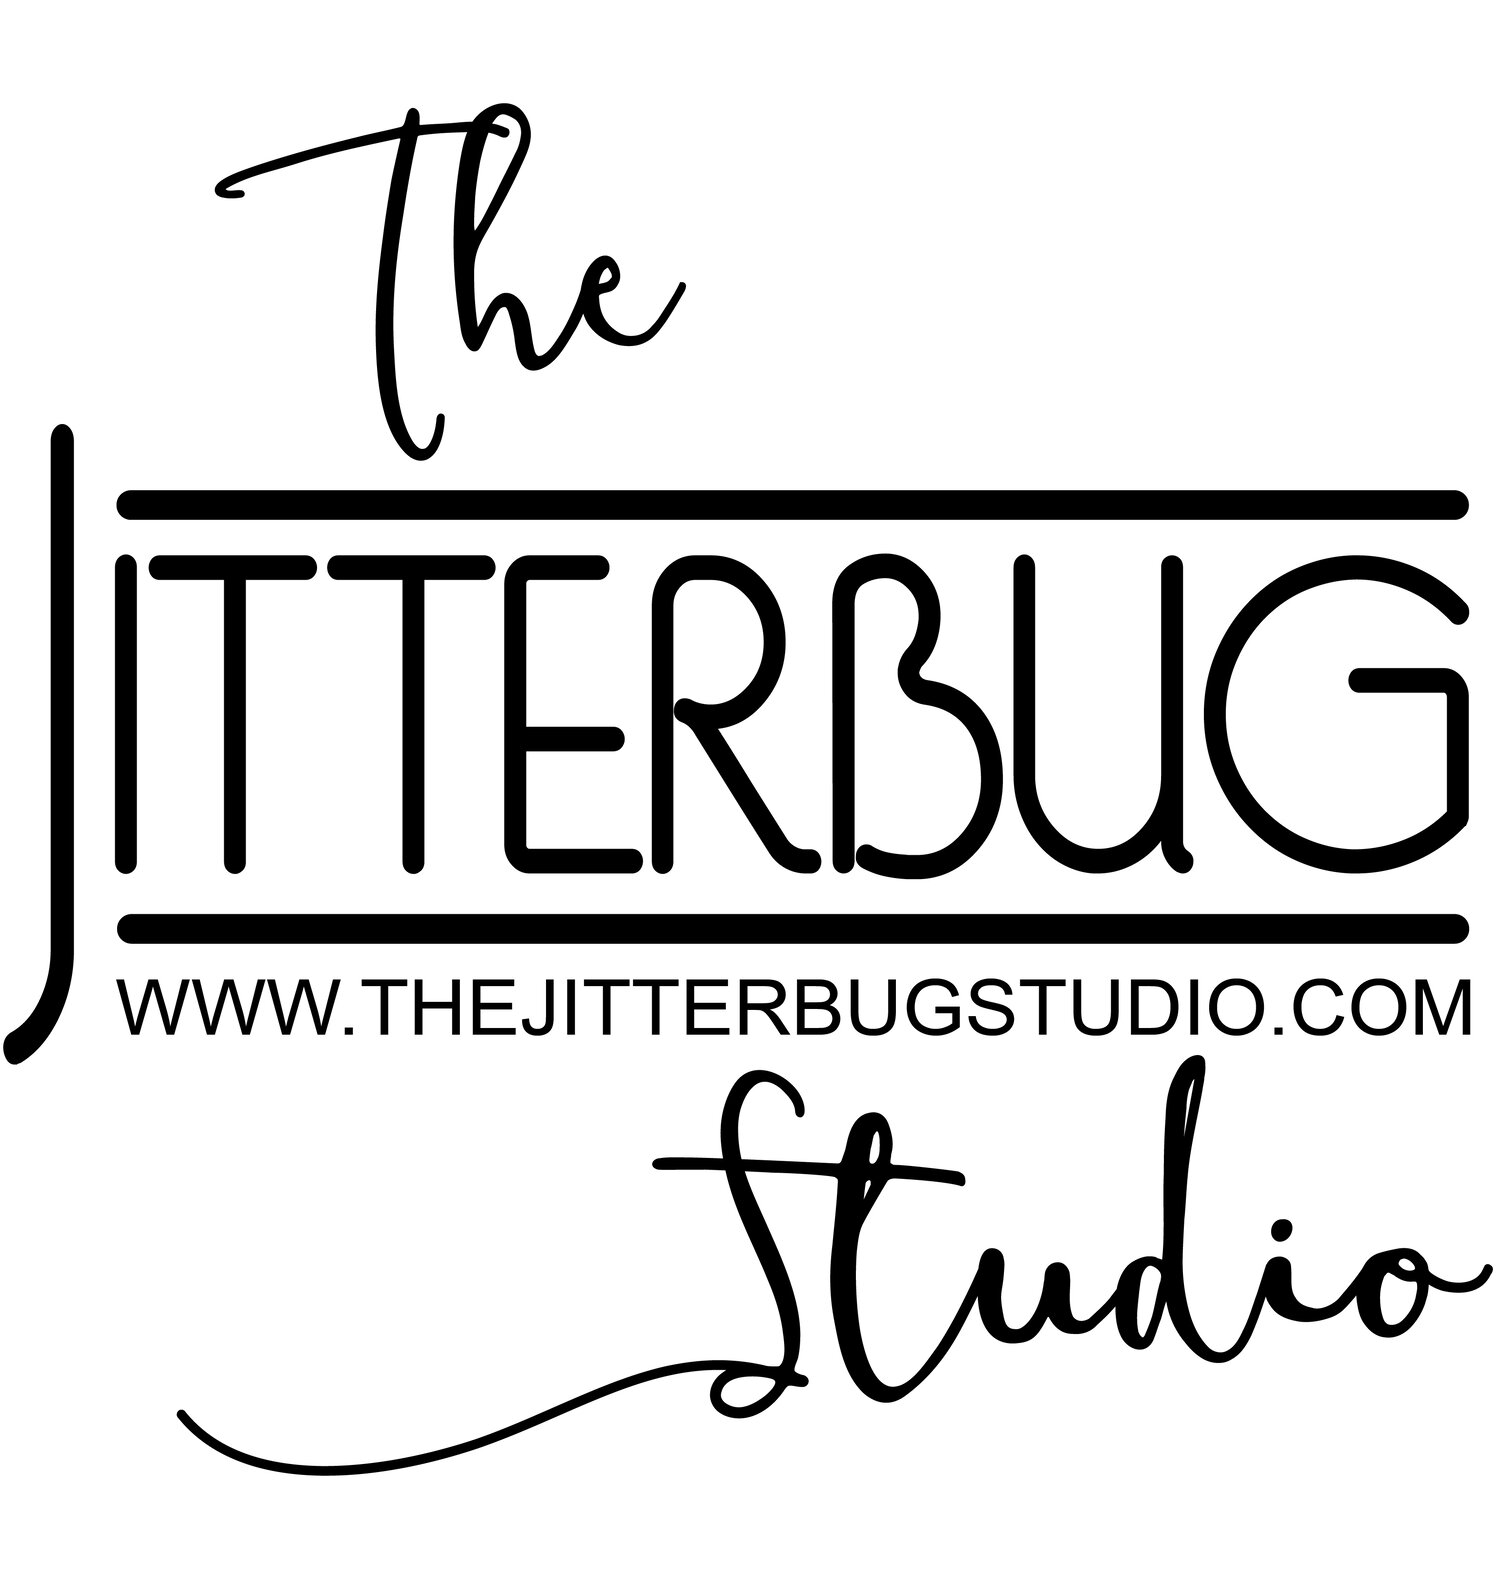 THE JITTERBUG STUDIO